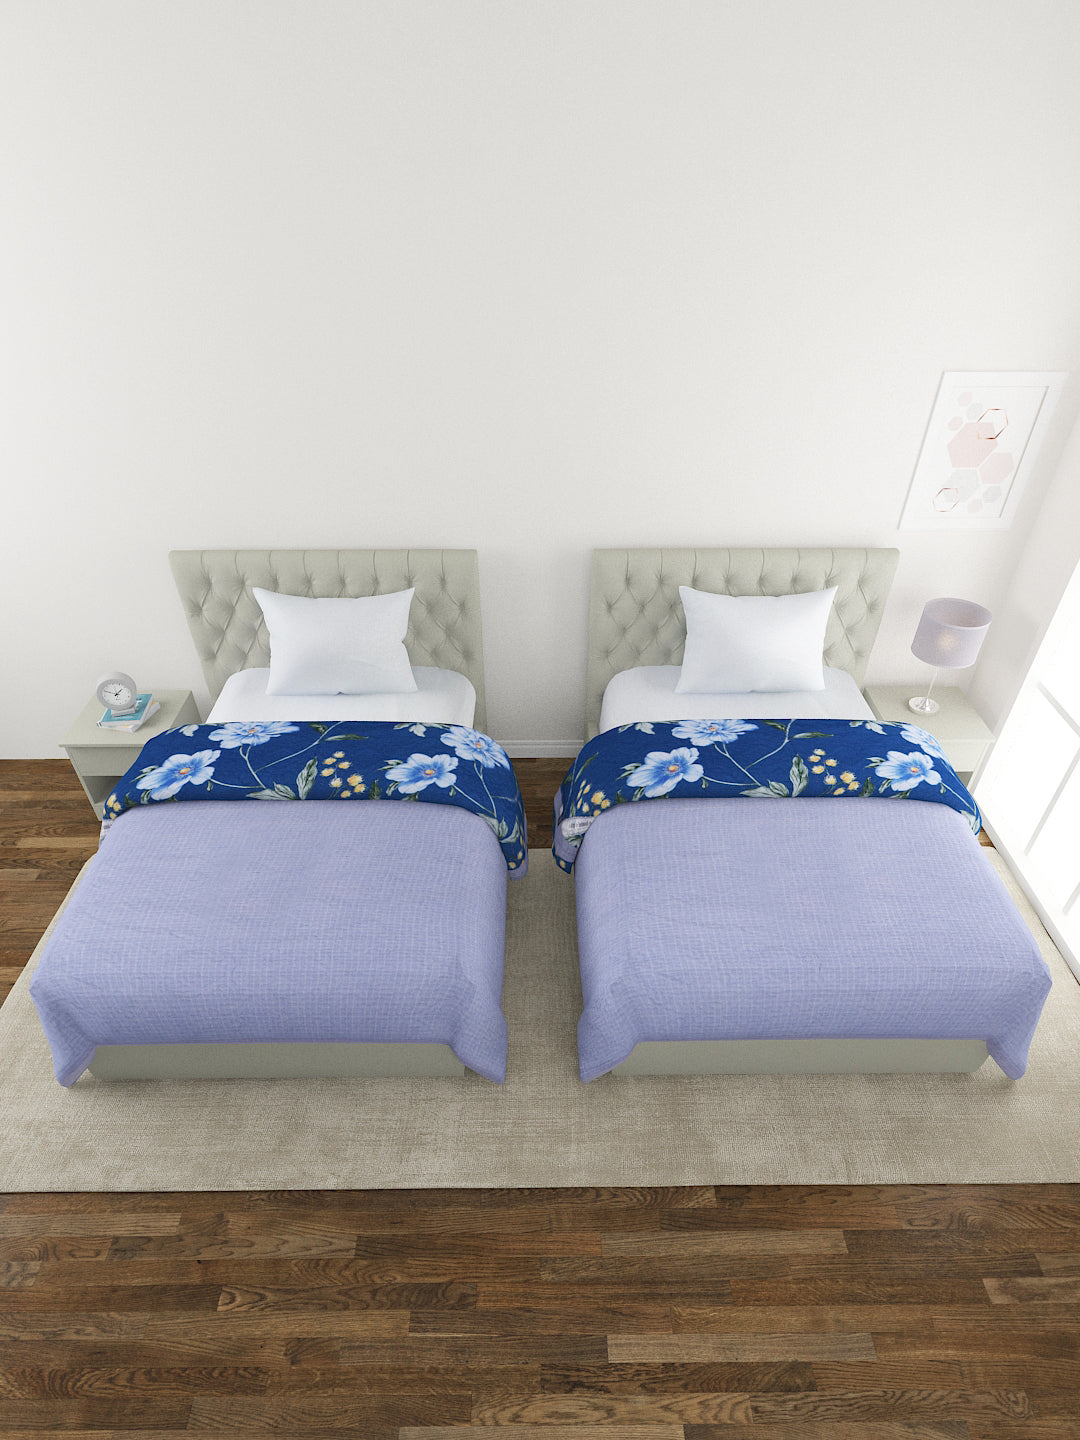 Floral Print Set of 2 Single Bed Light Weight Comforter- Navy Blue